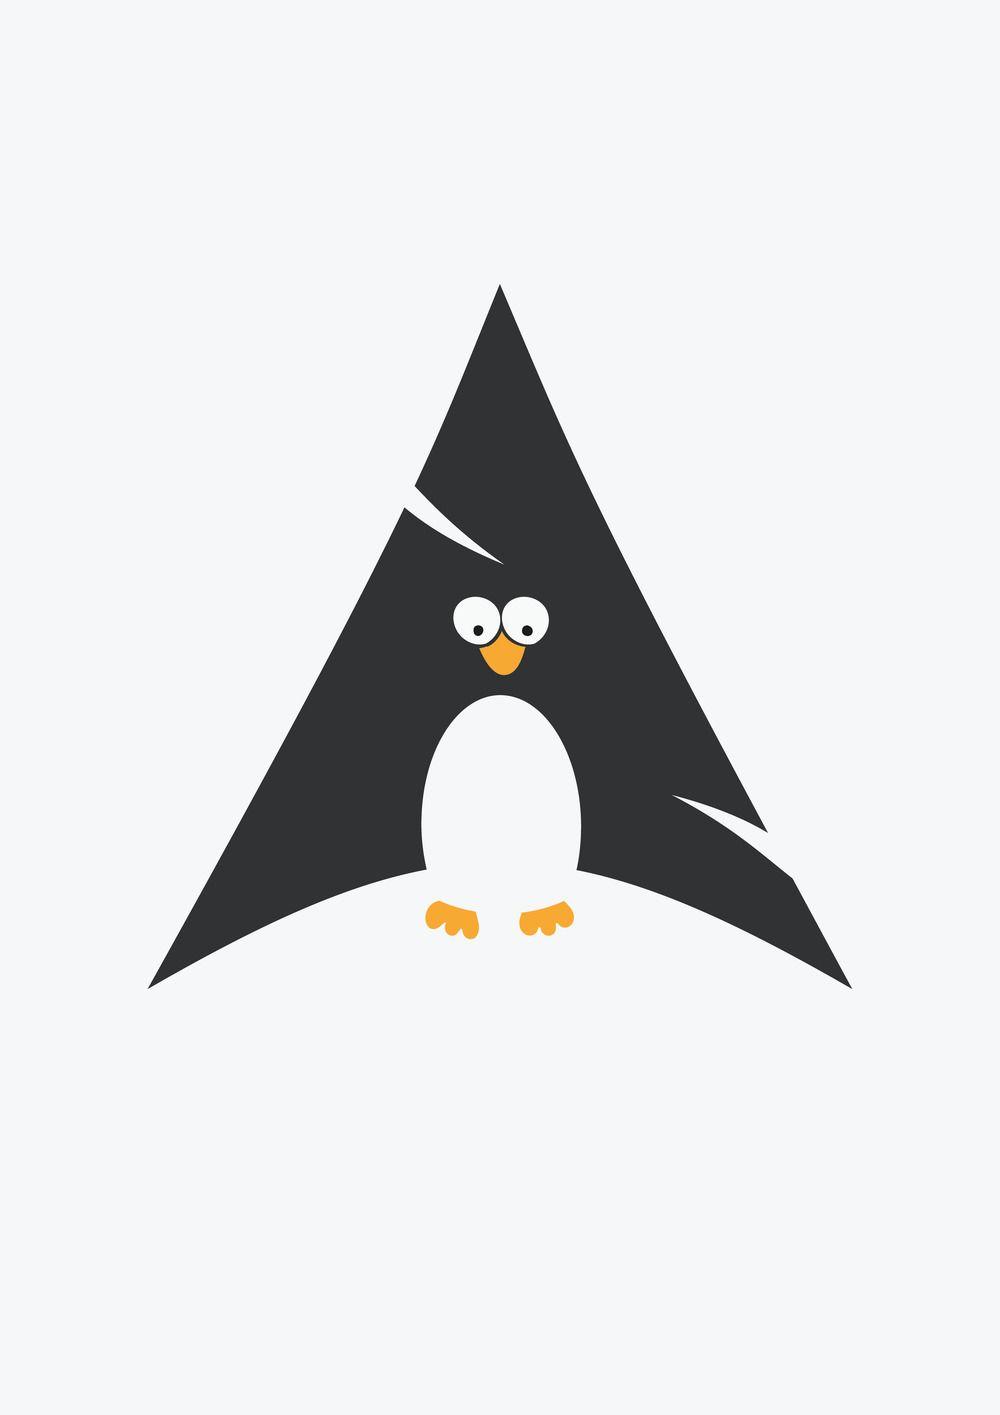 Linux Penguin Logo - arch logo with tux picture